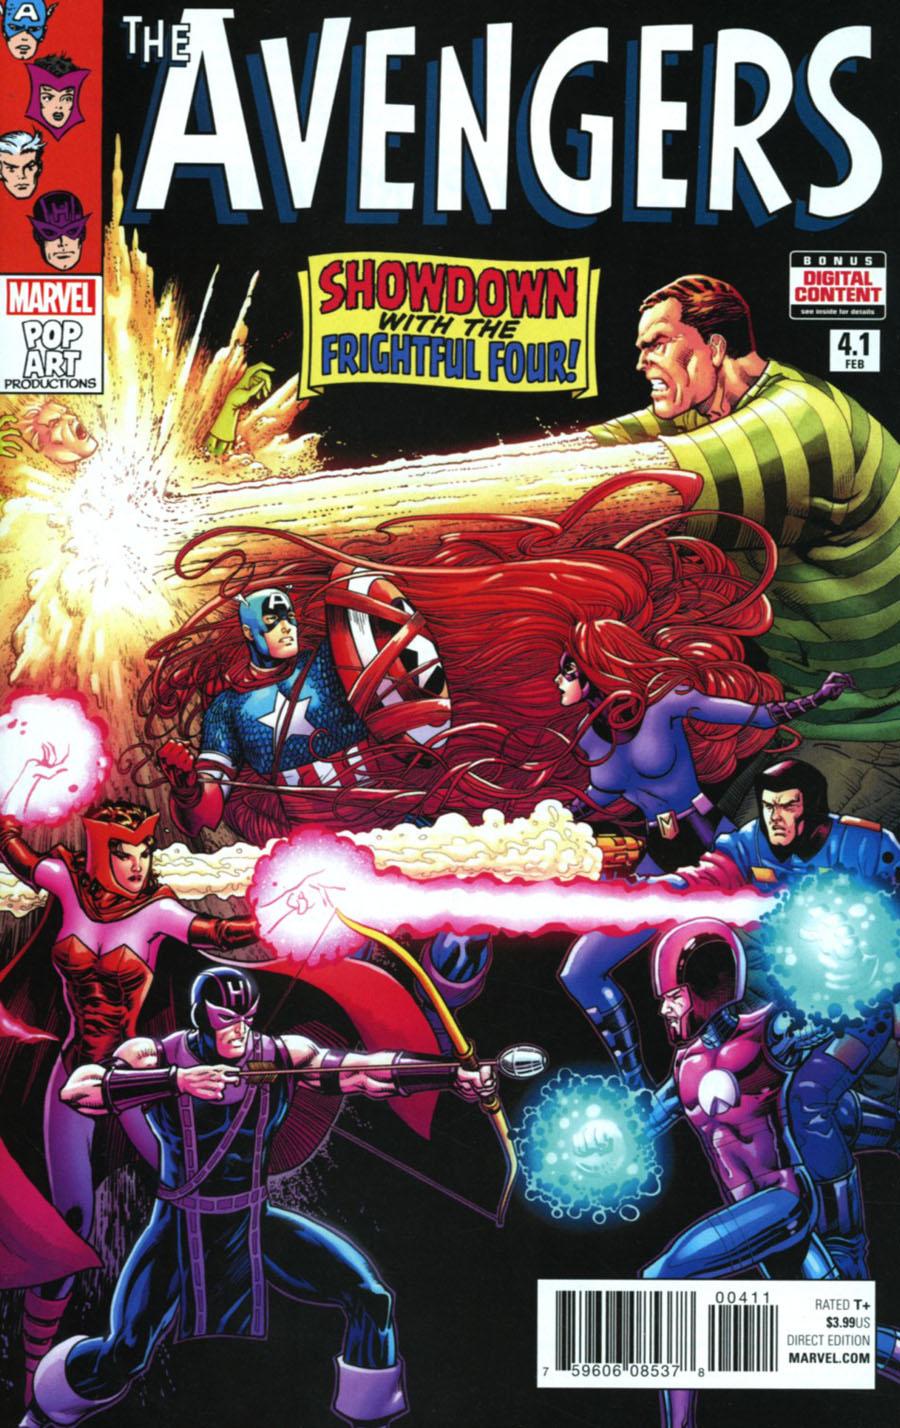 The Avengers Vol. 6 #4.1